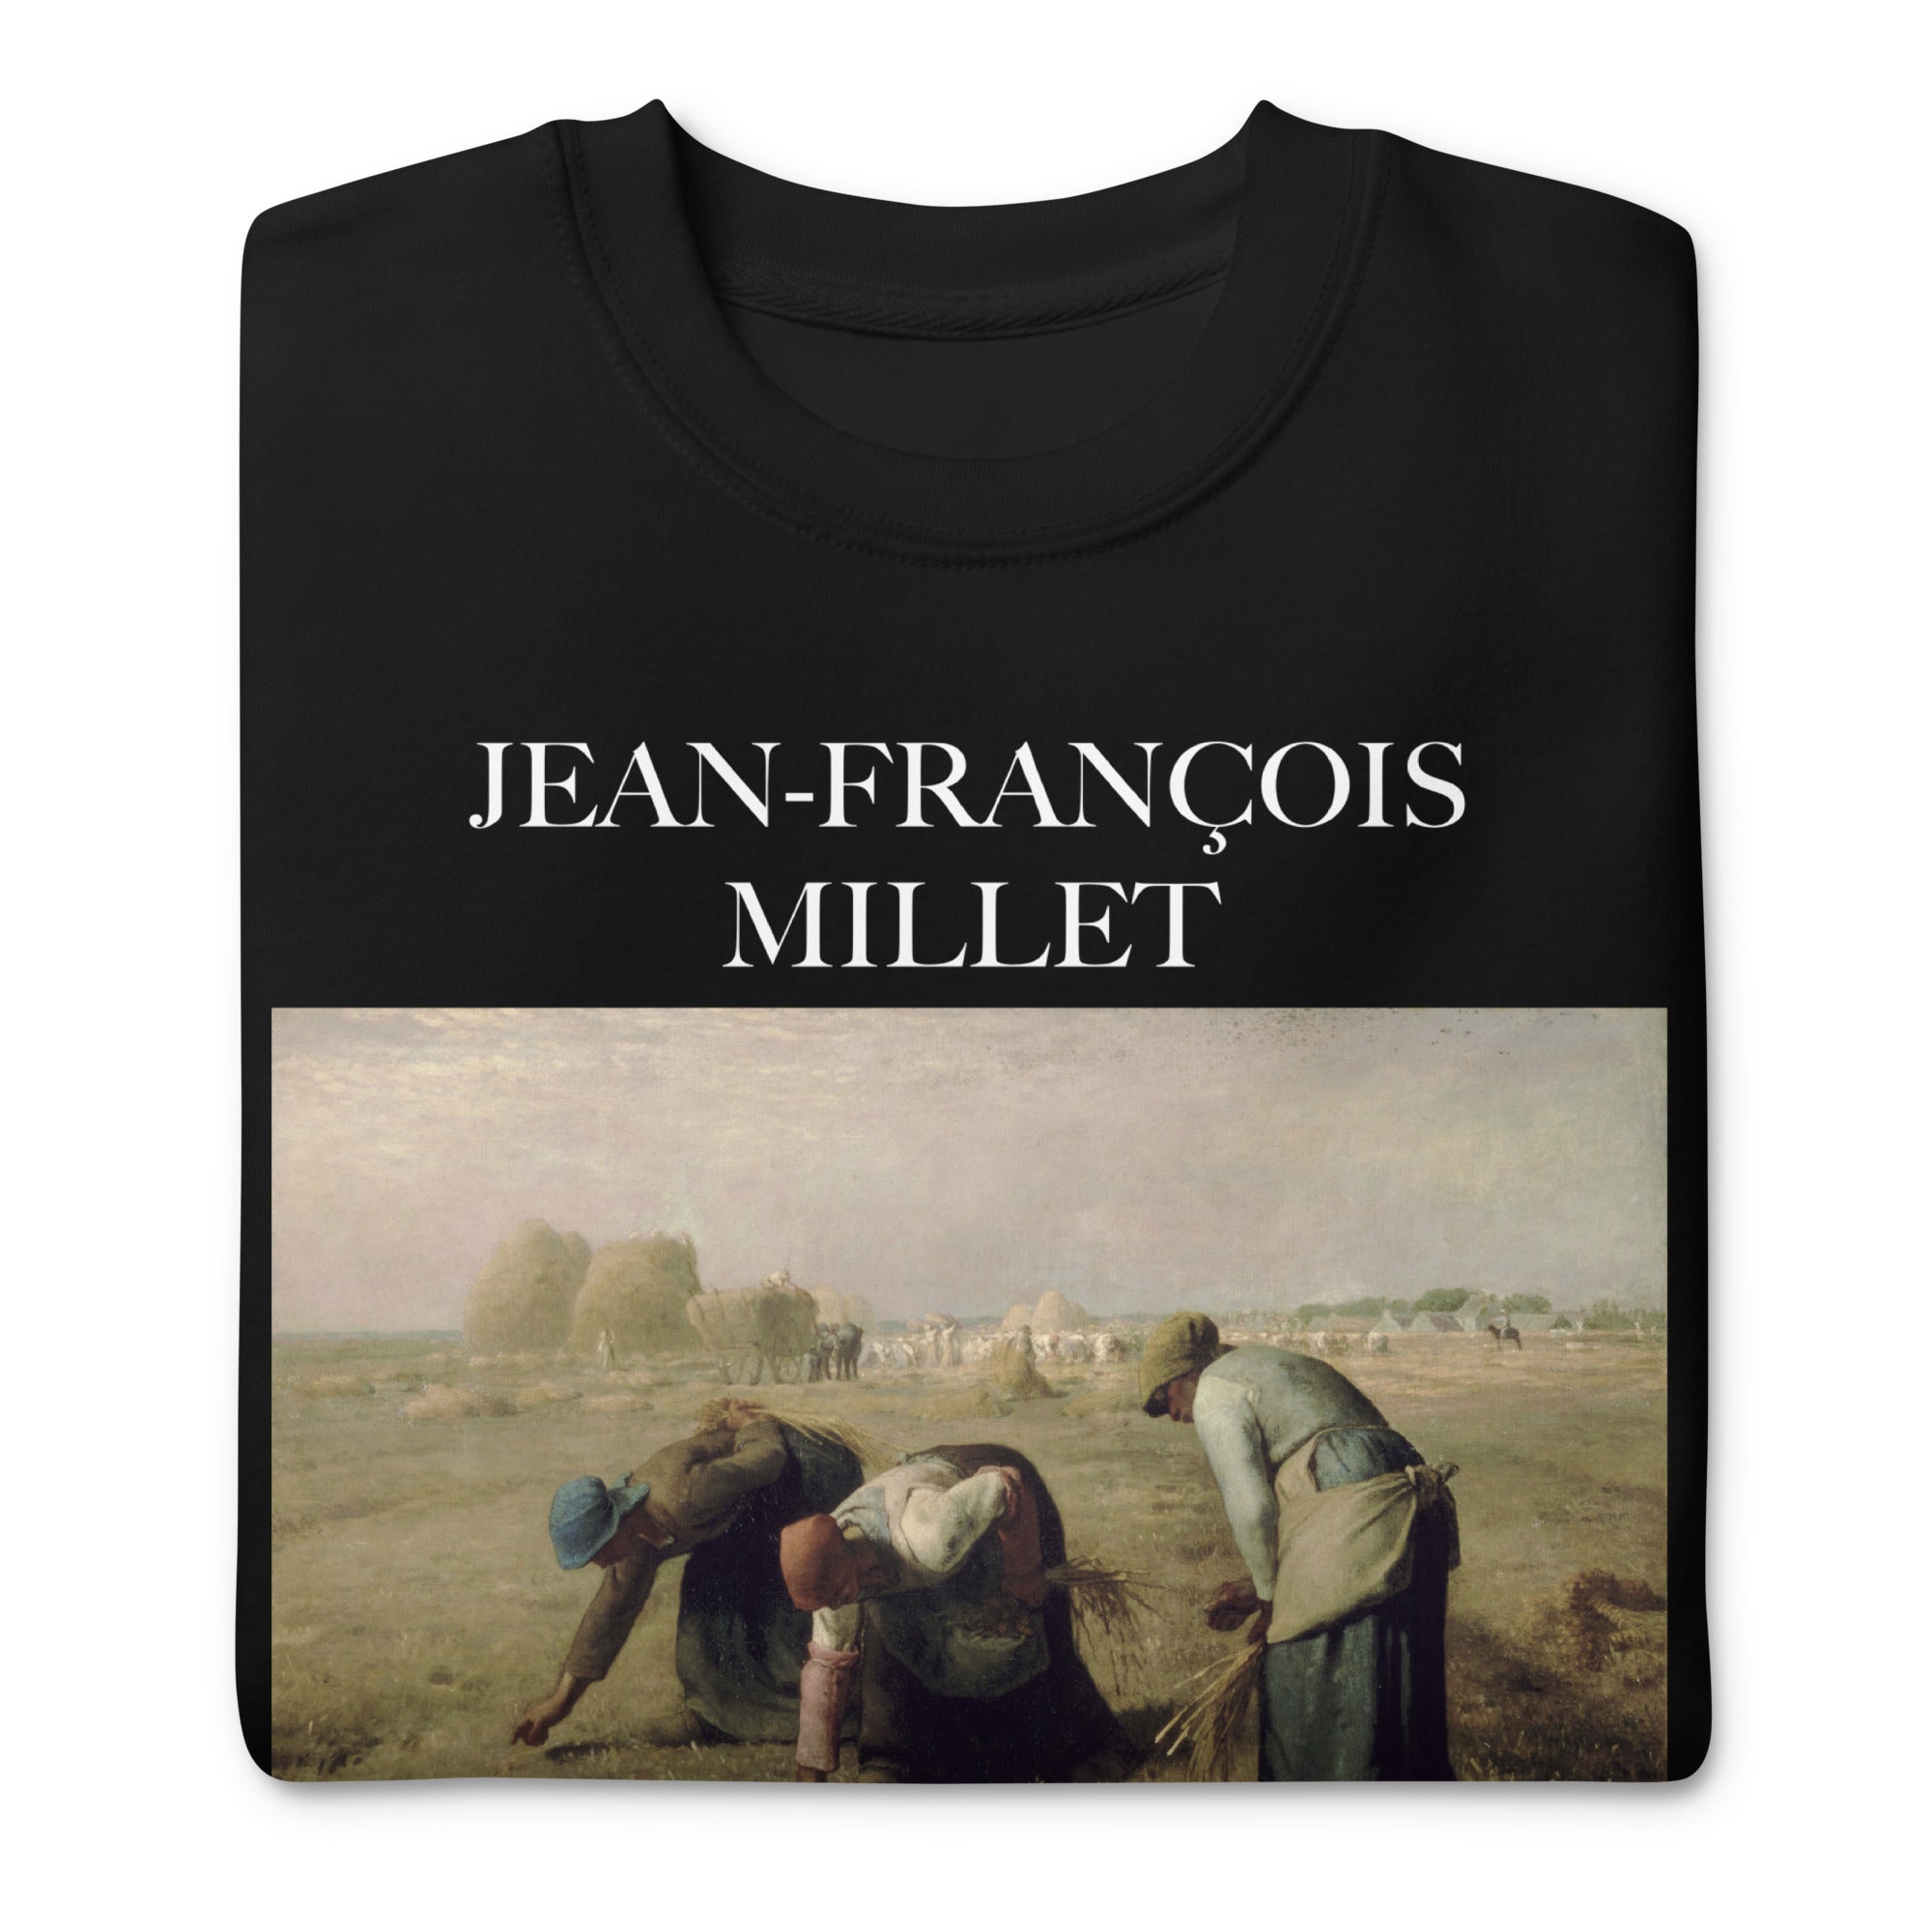 Jean-François Millet 'The Gleaners' Famous Painting Sweatshirt | Unisex Premium Sweatshirt